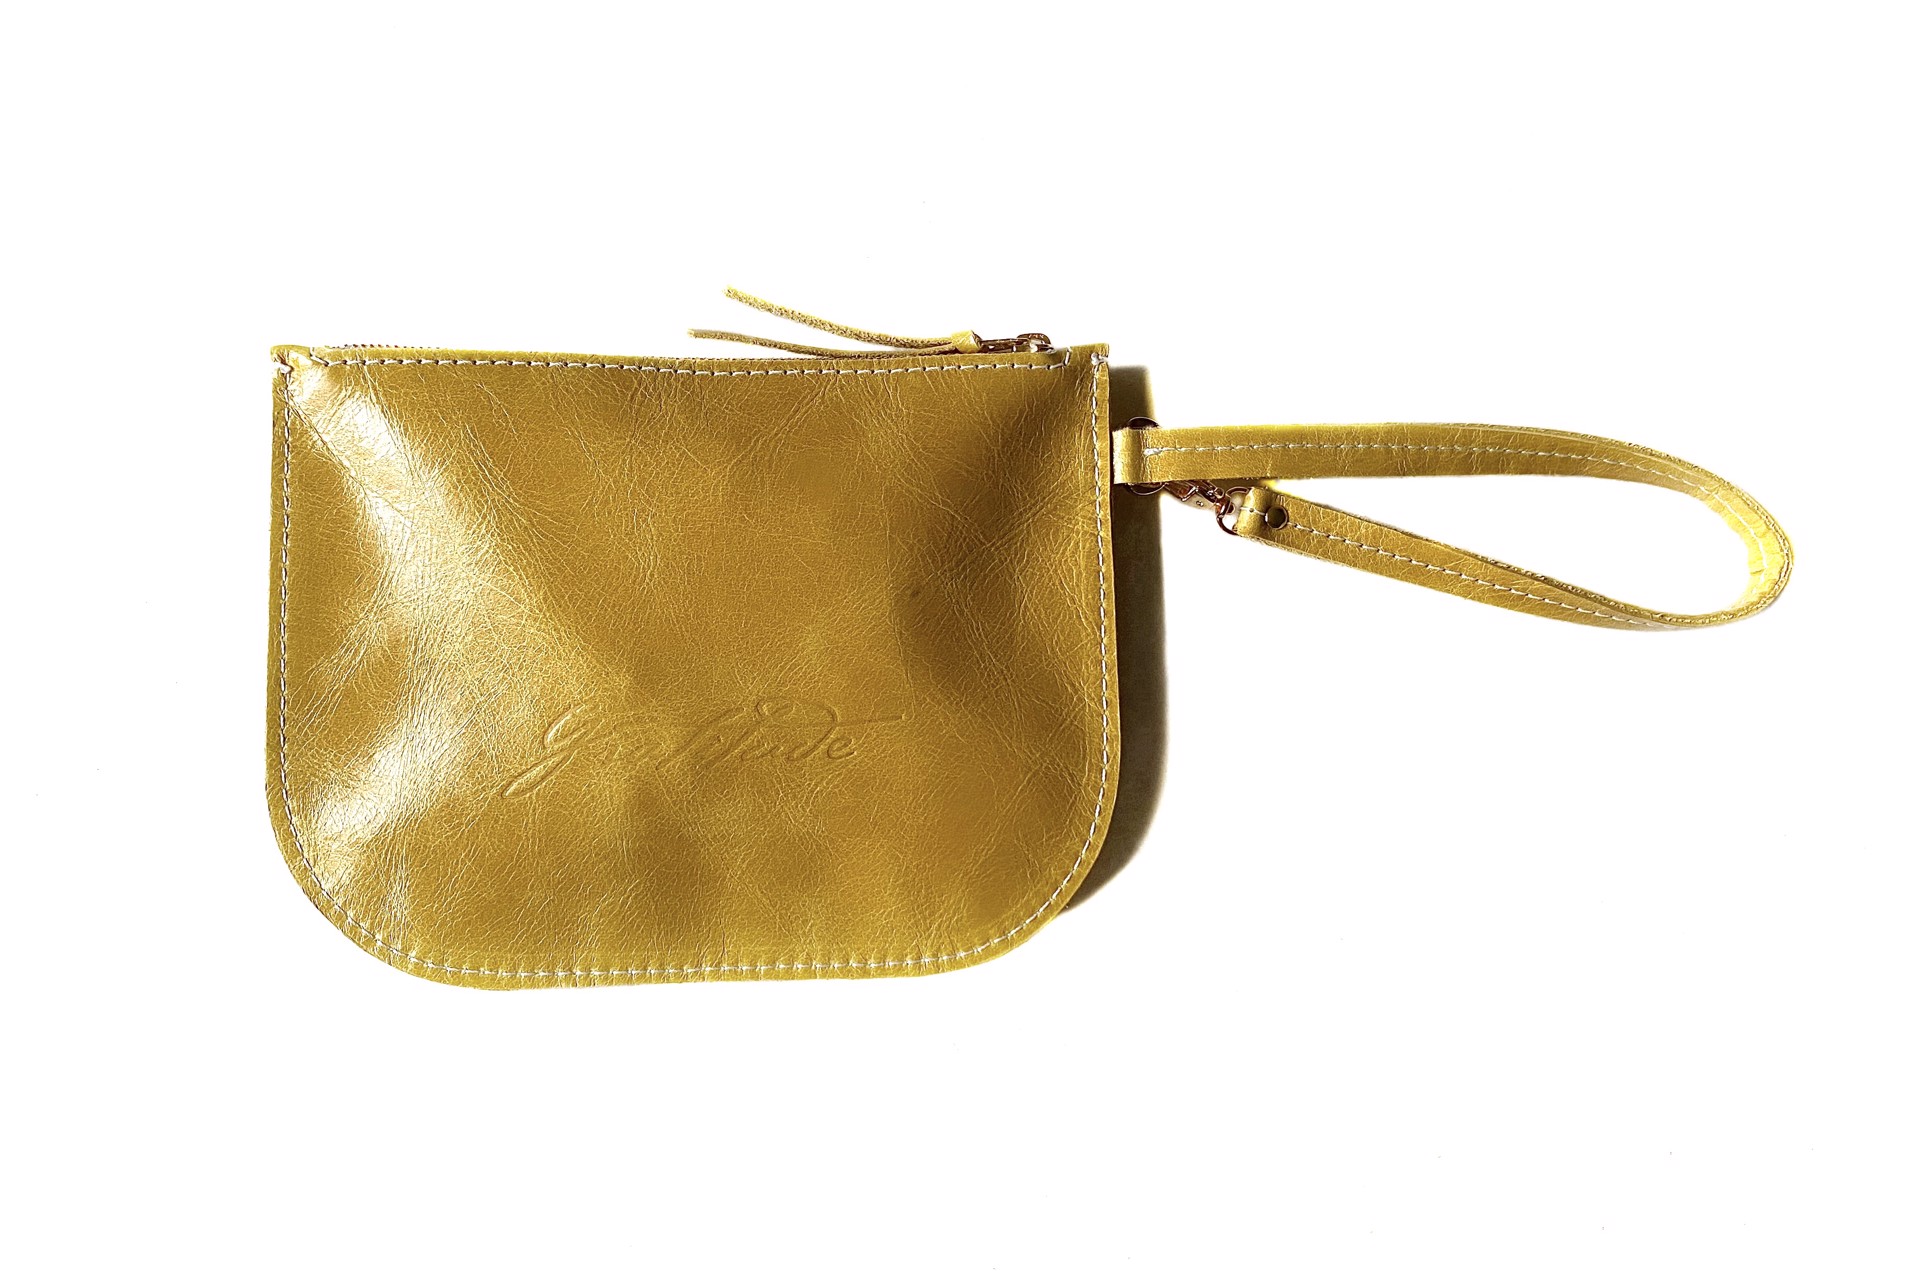 Small yellow leather wristlet handbag by Feel Handmade